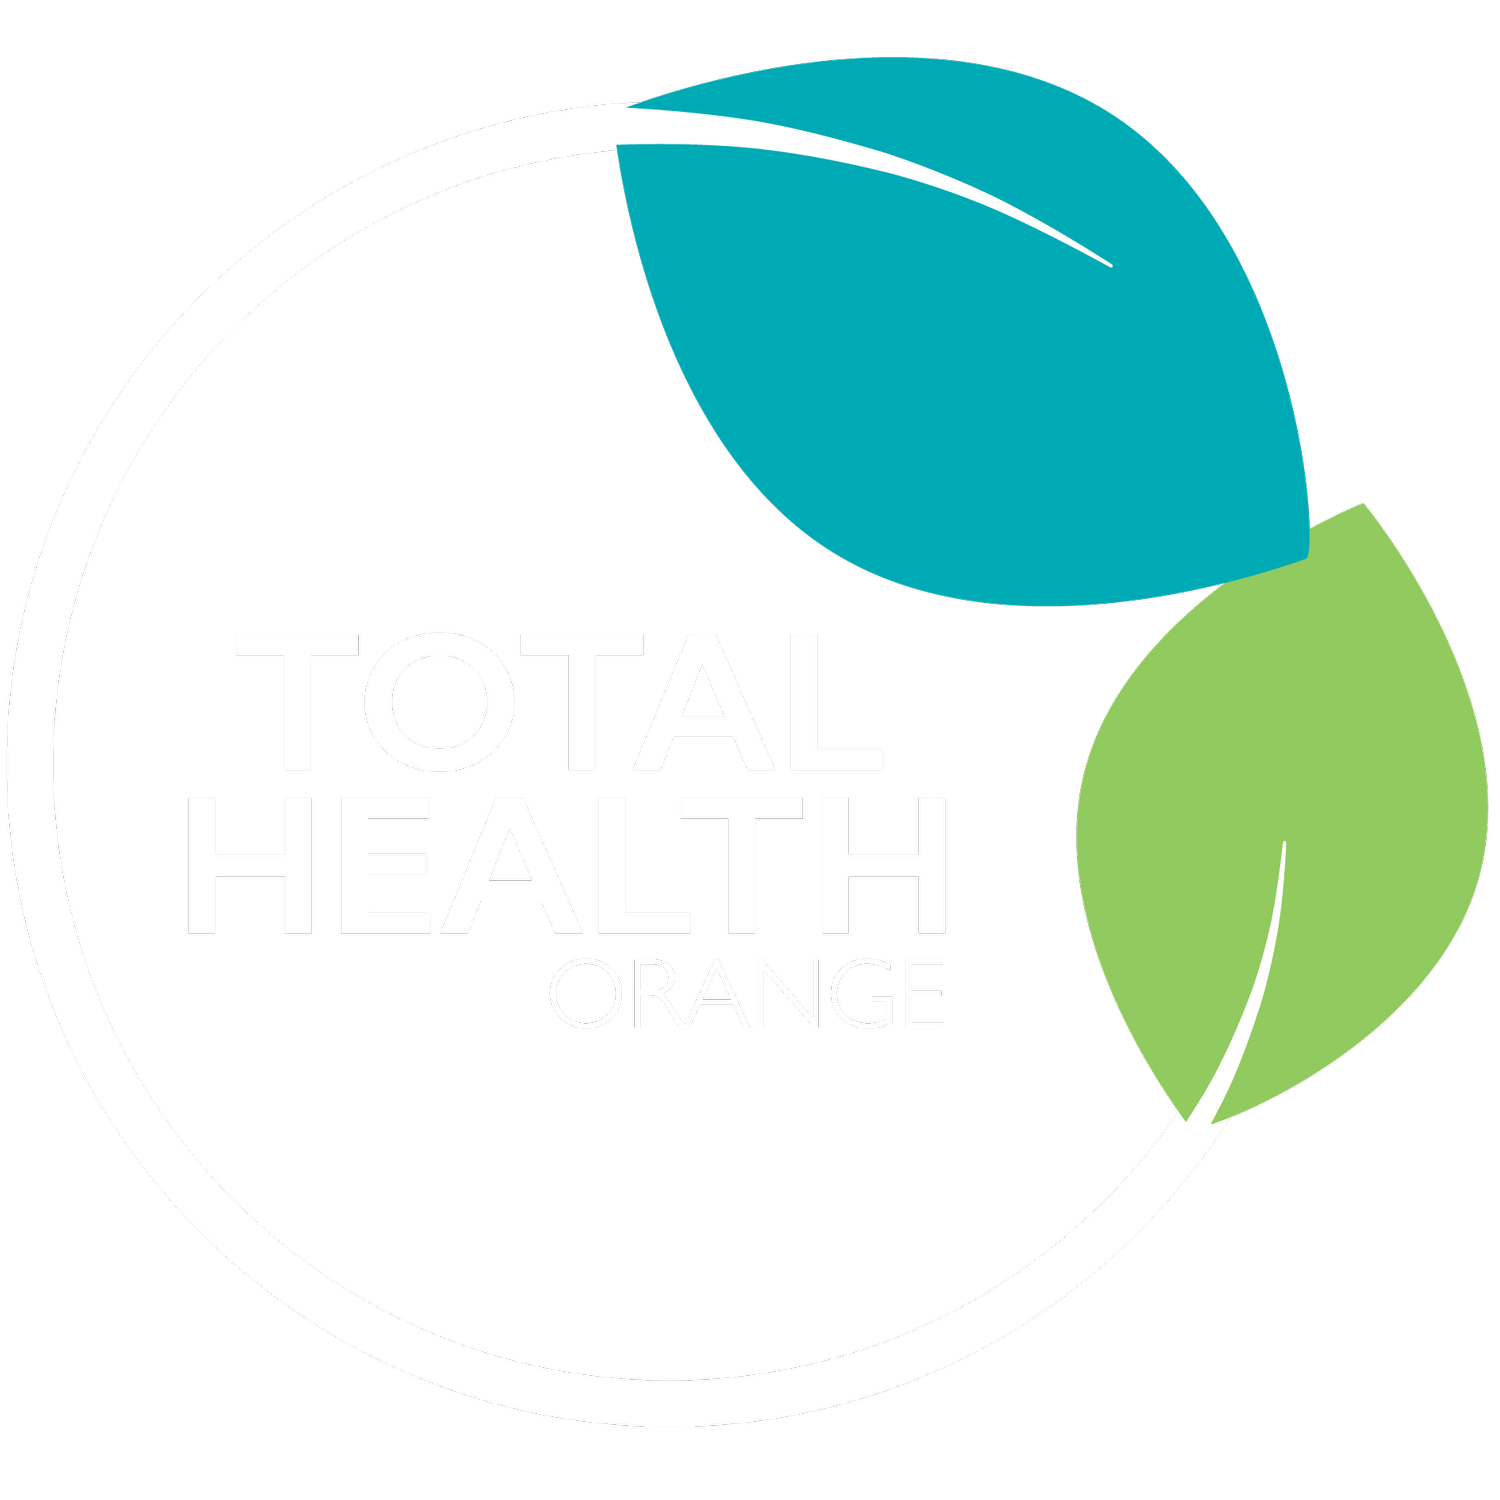 Total Health Orange